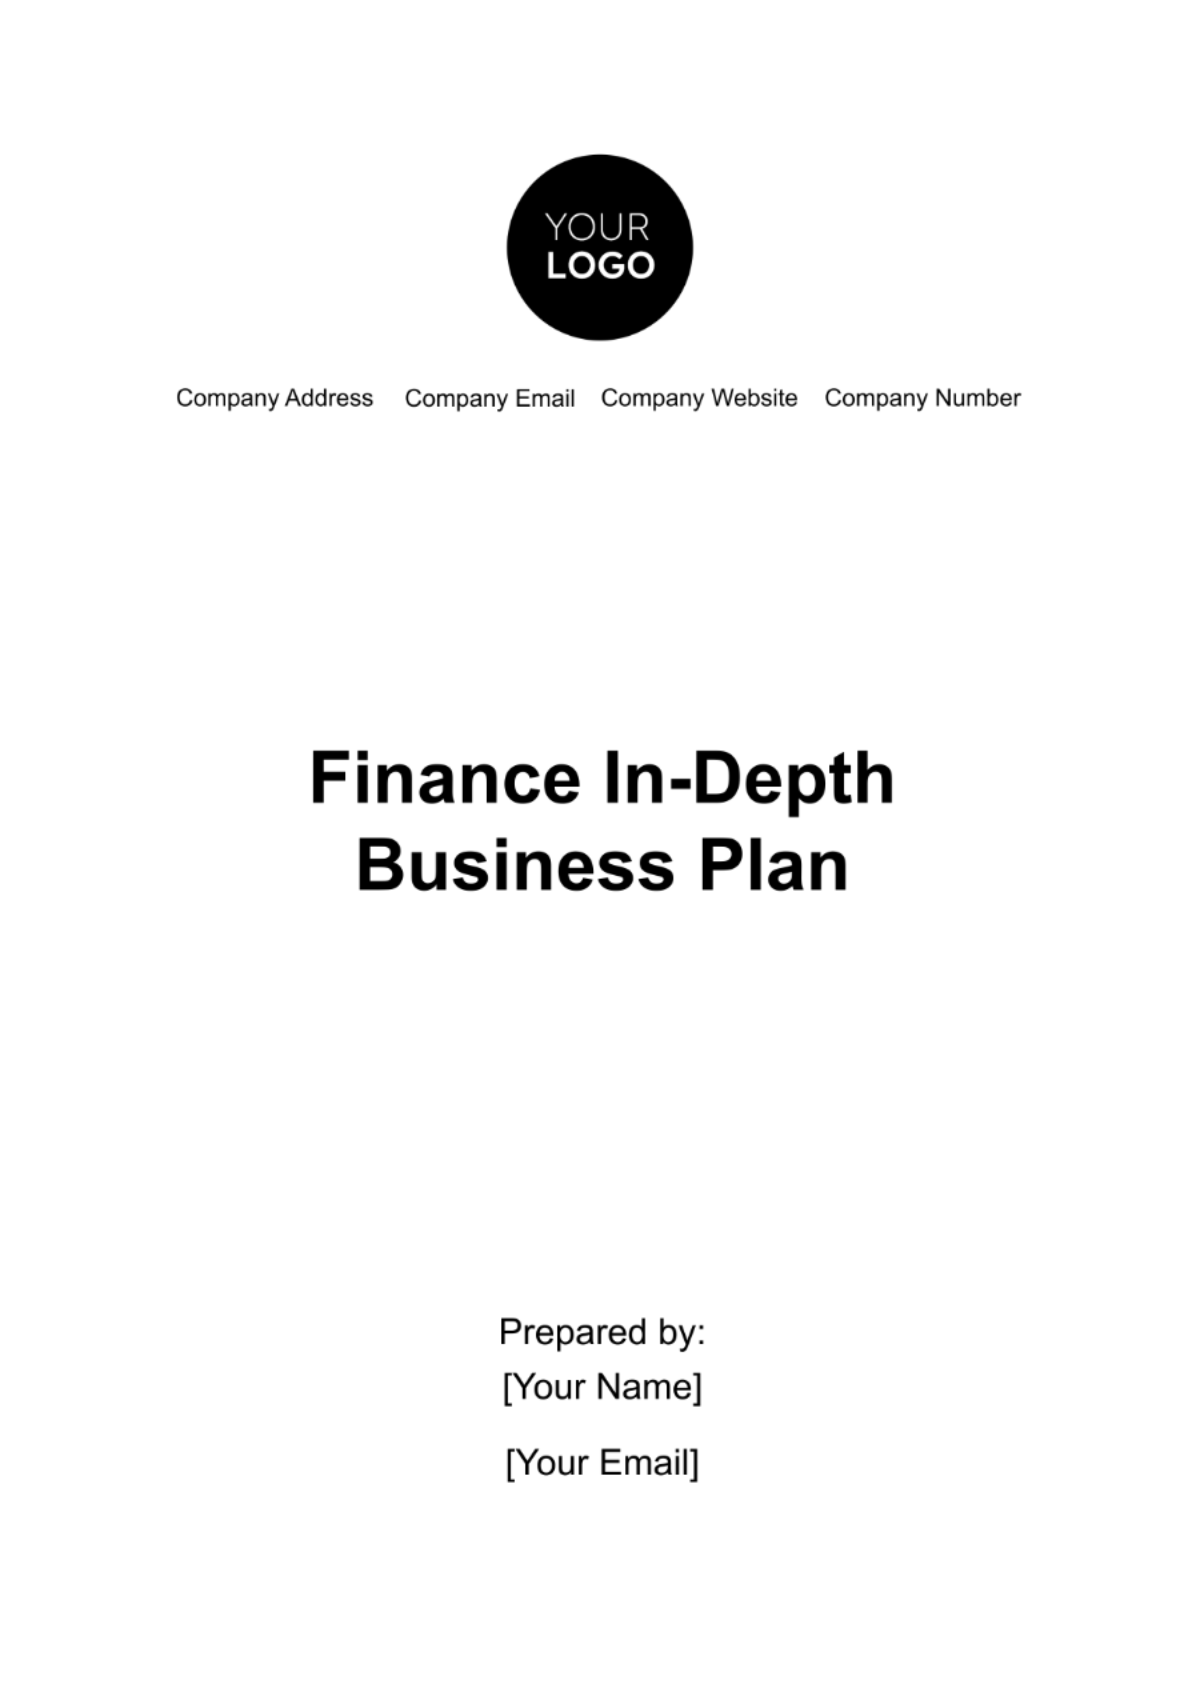 Finance In-Depth Business Plan Template